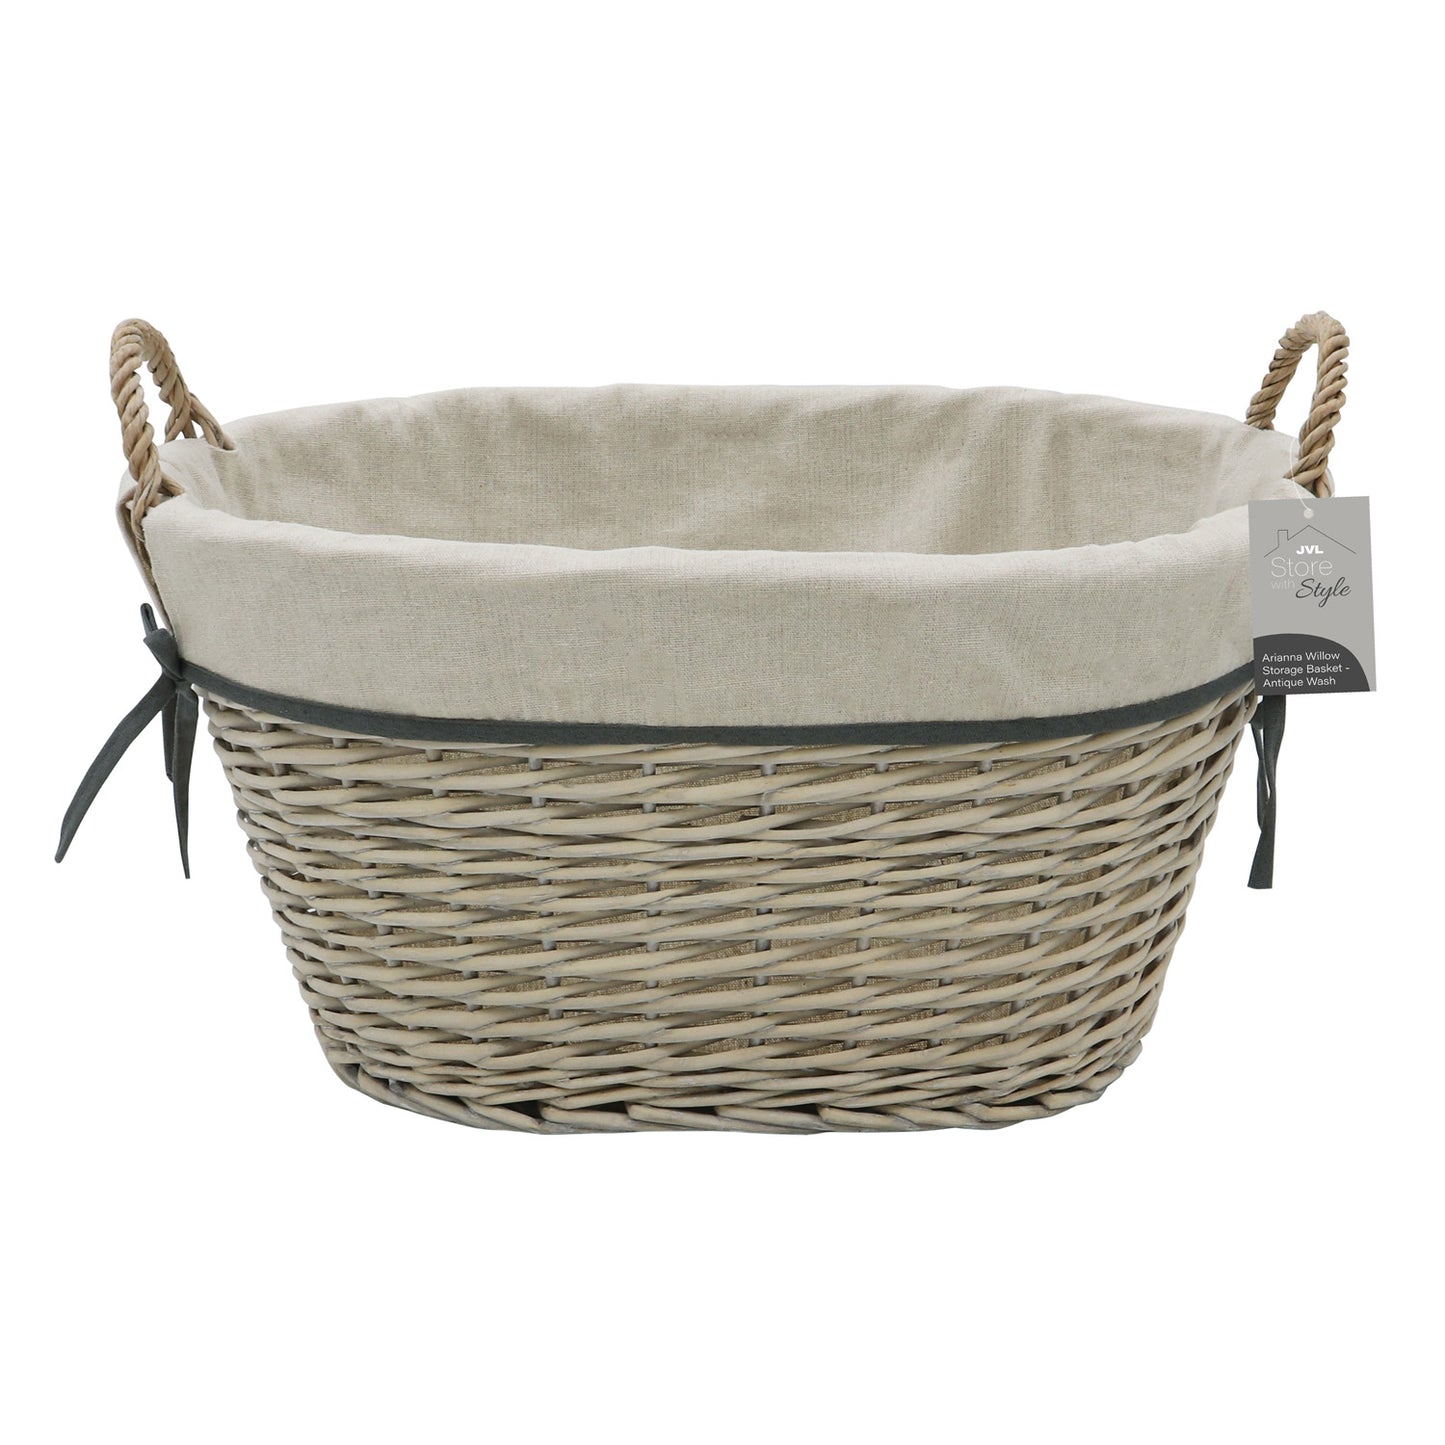 Arianna Antique Wash Oval Willow Storage Basket - Large